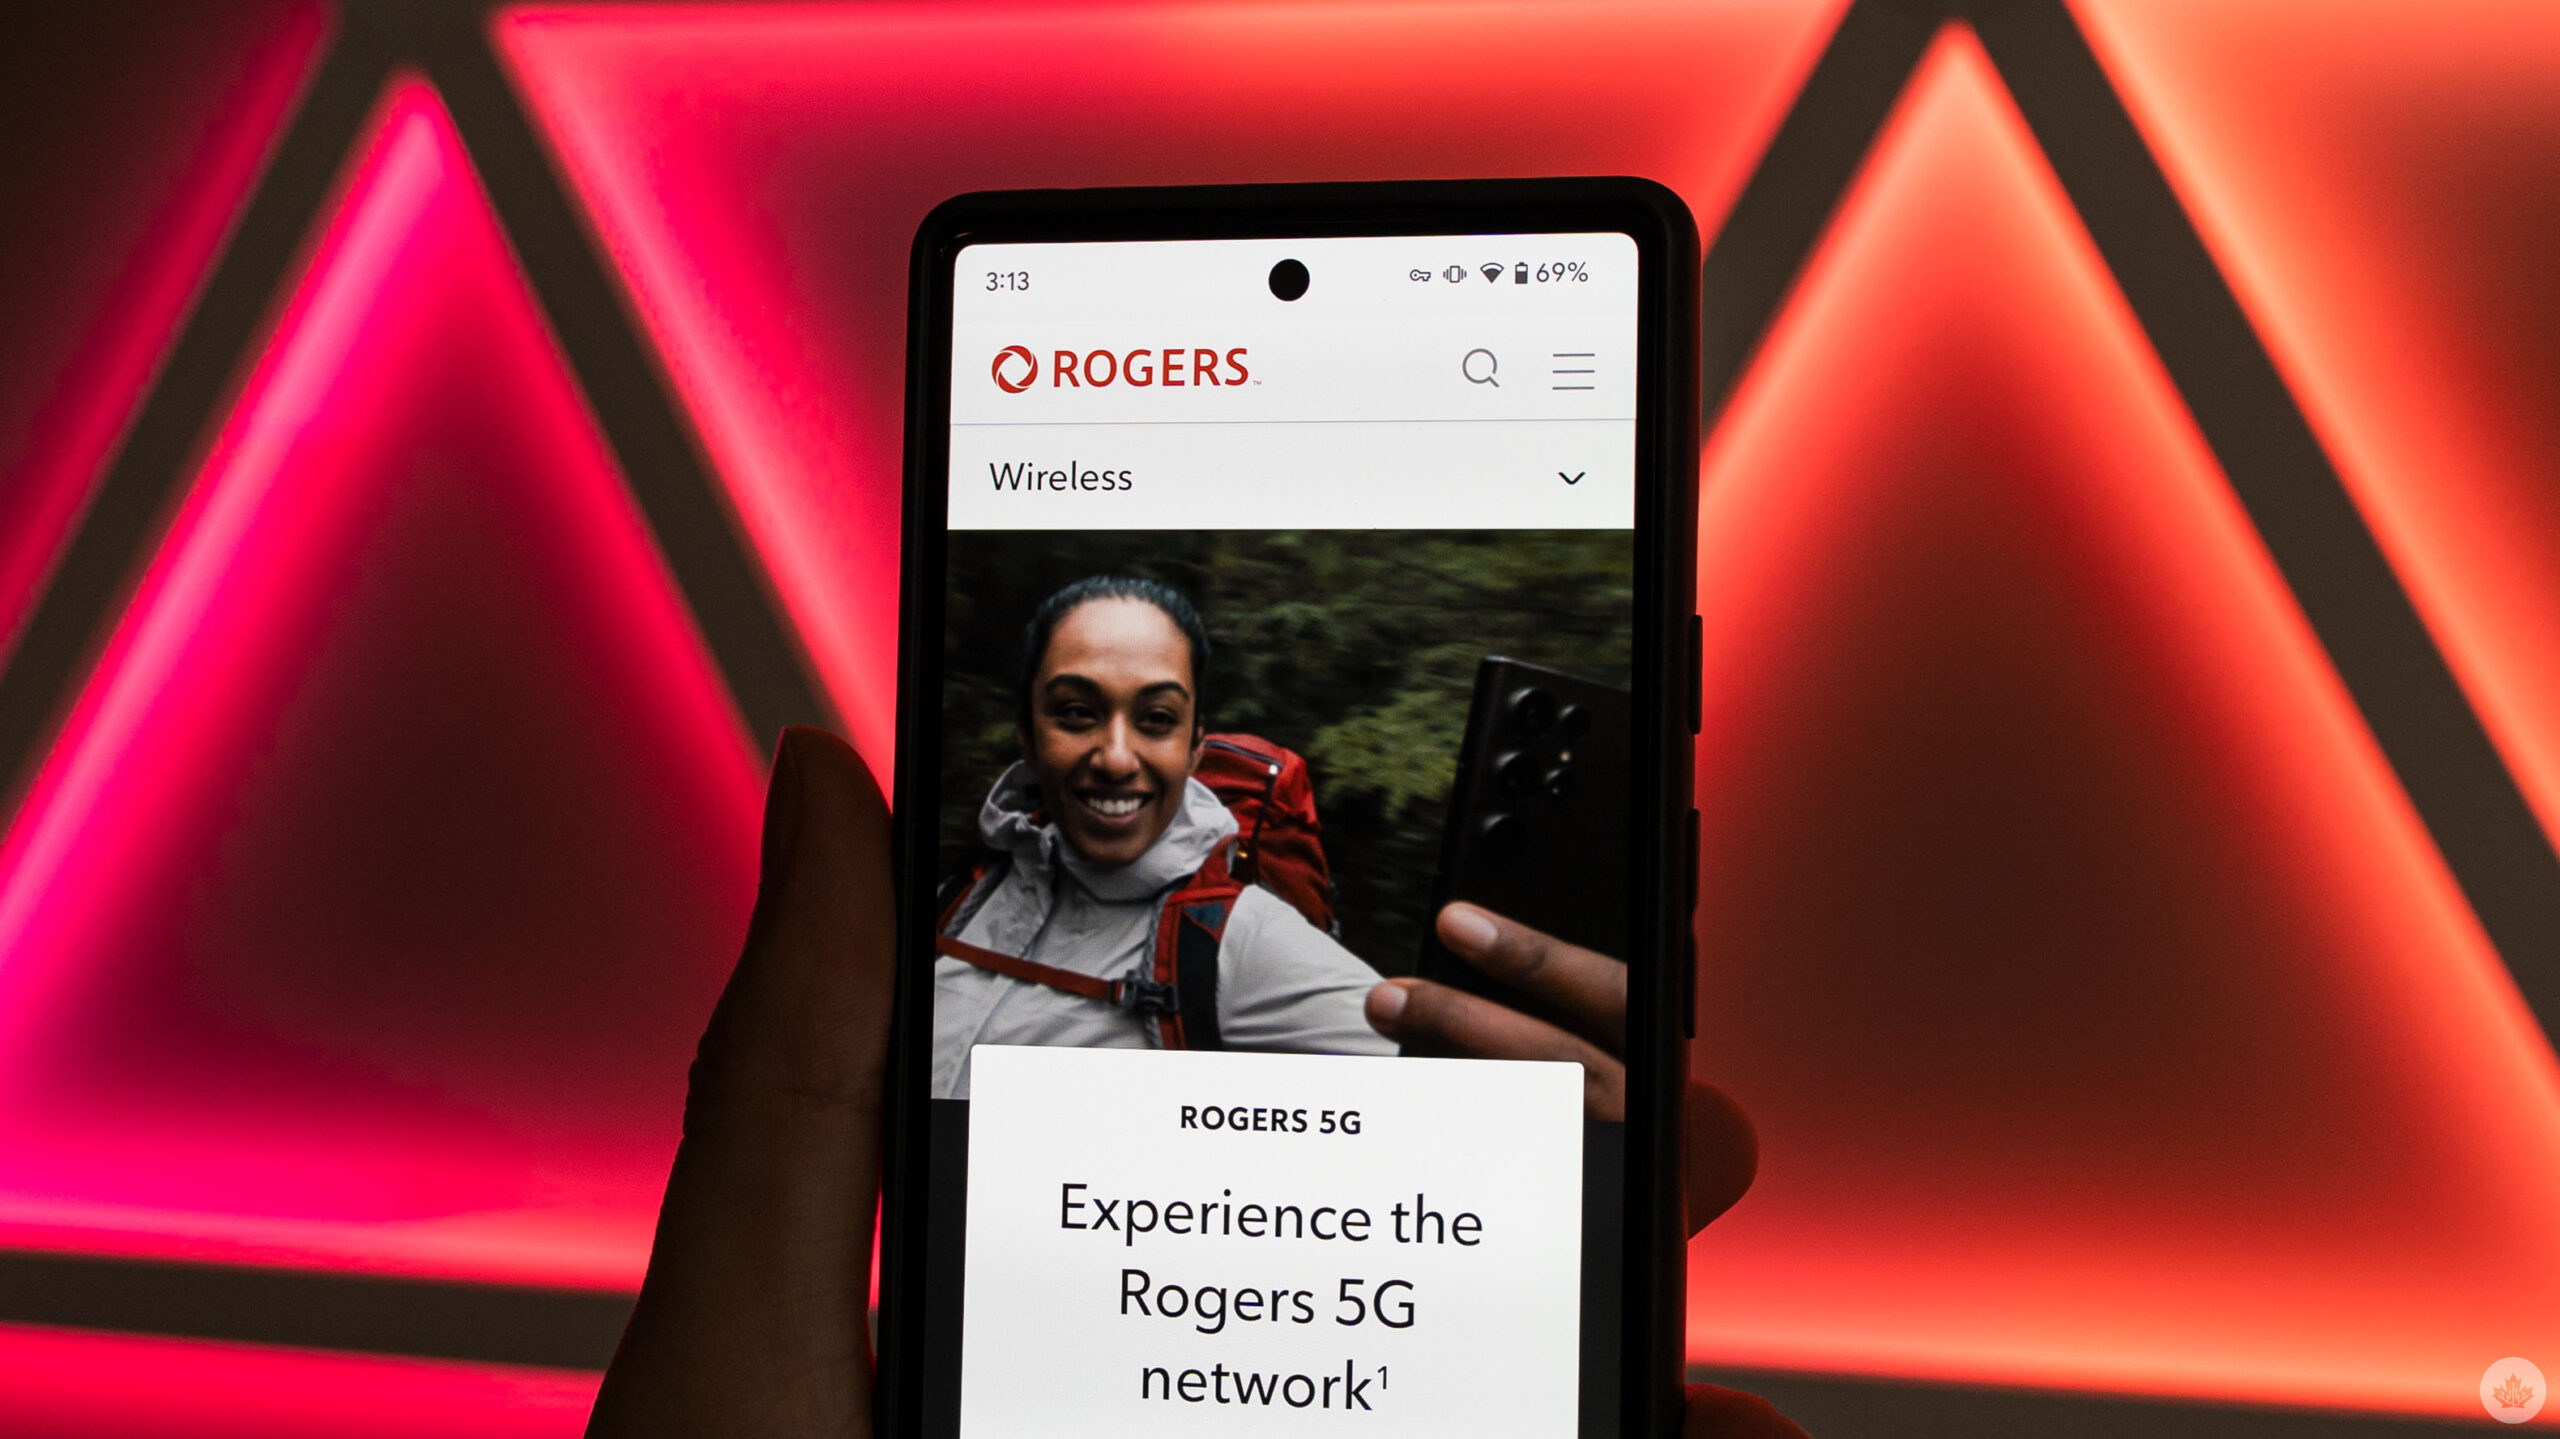 Rogers website on smartphone